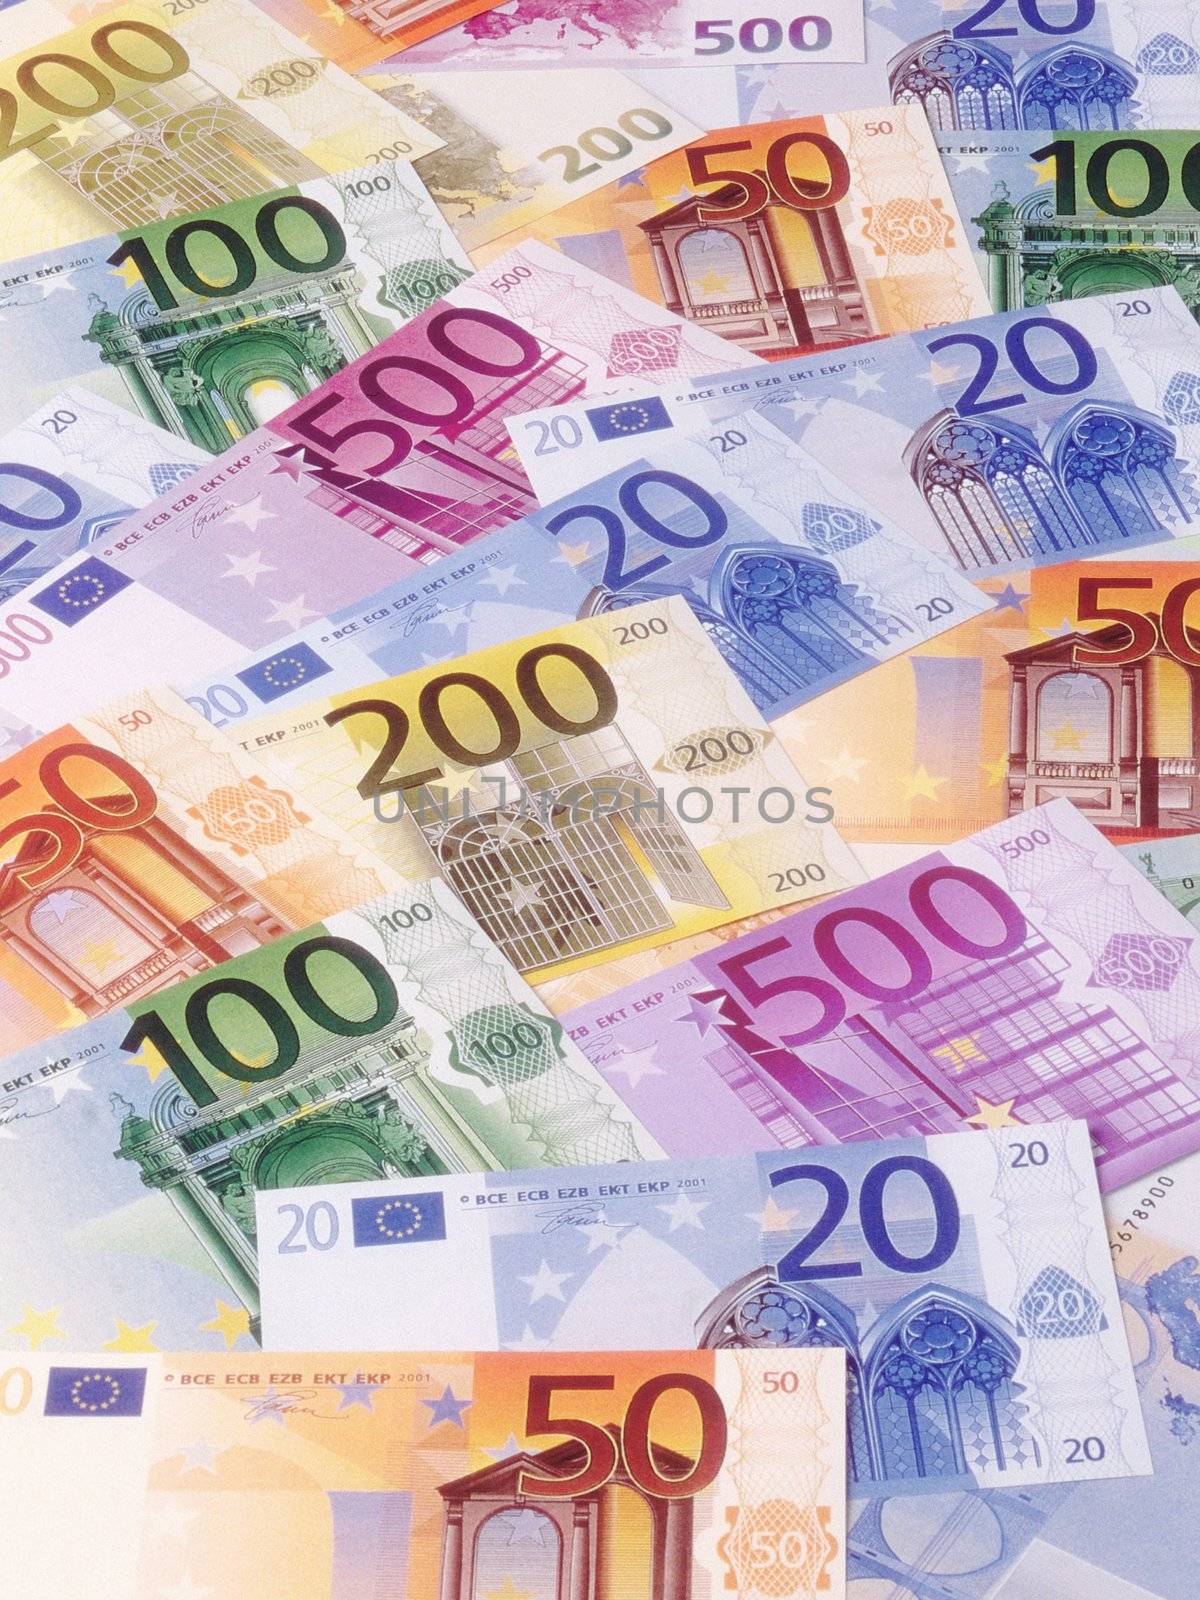 Euro money by Baltus